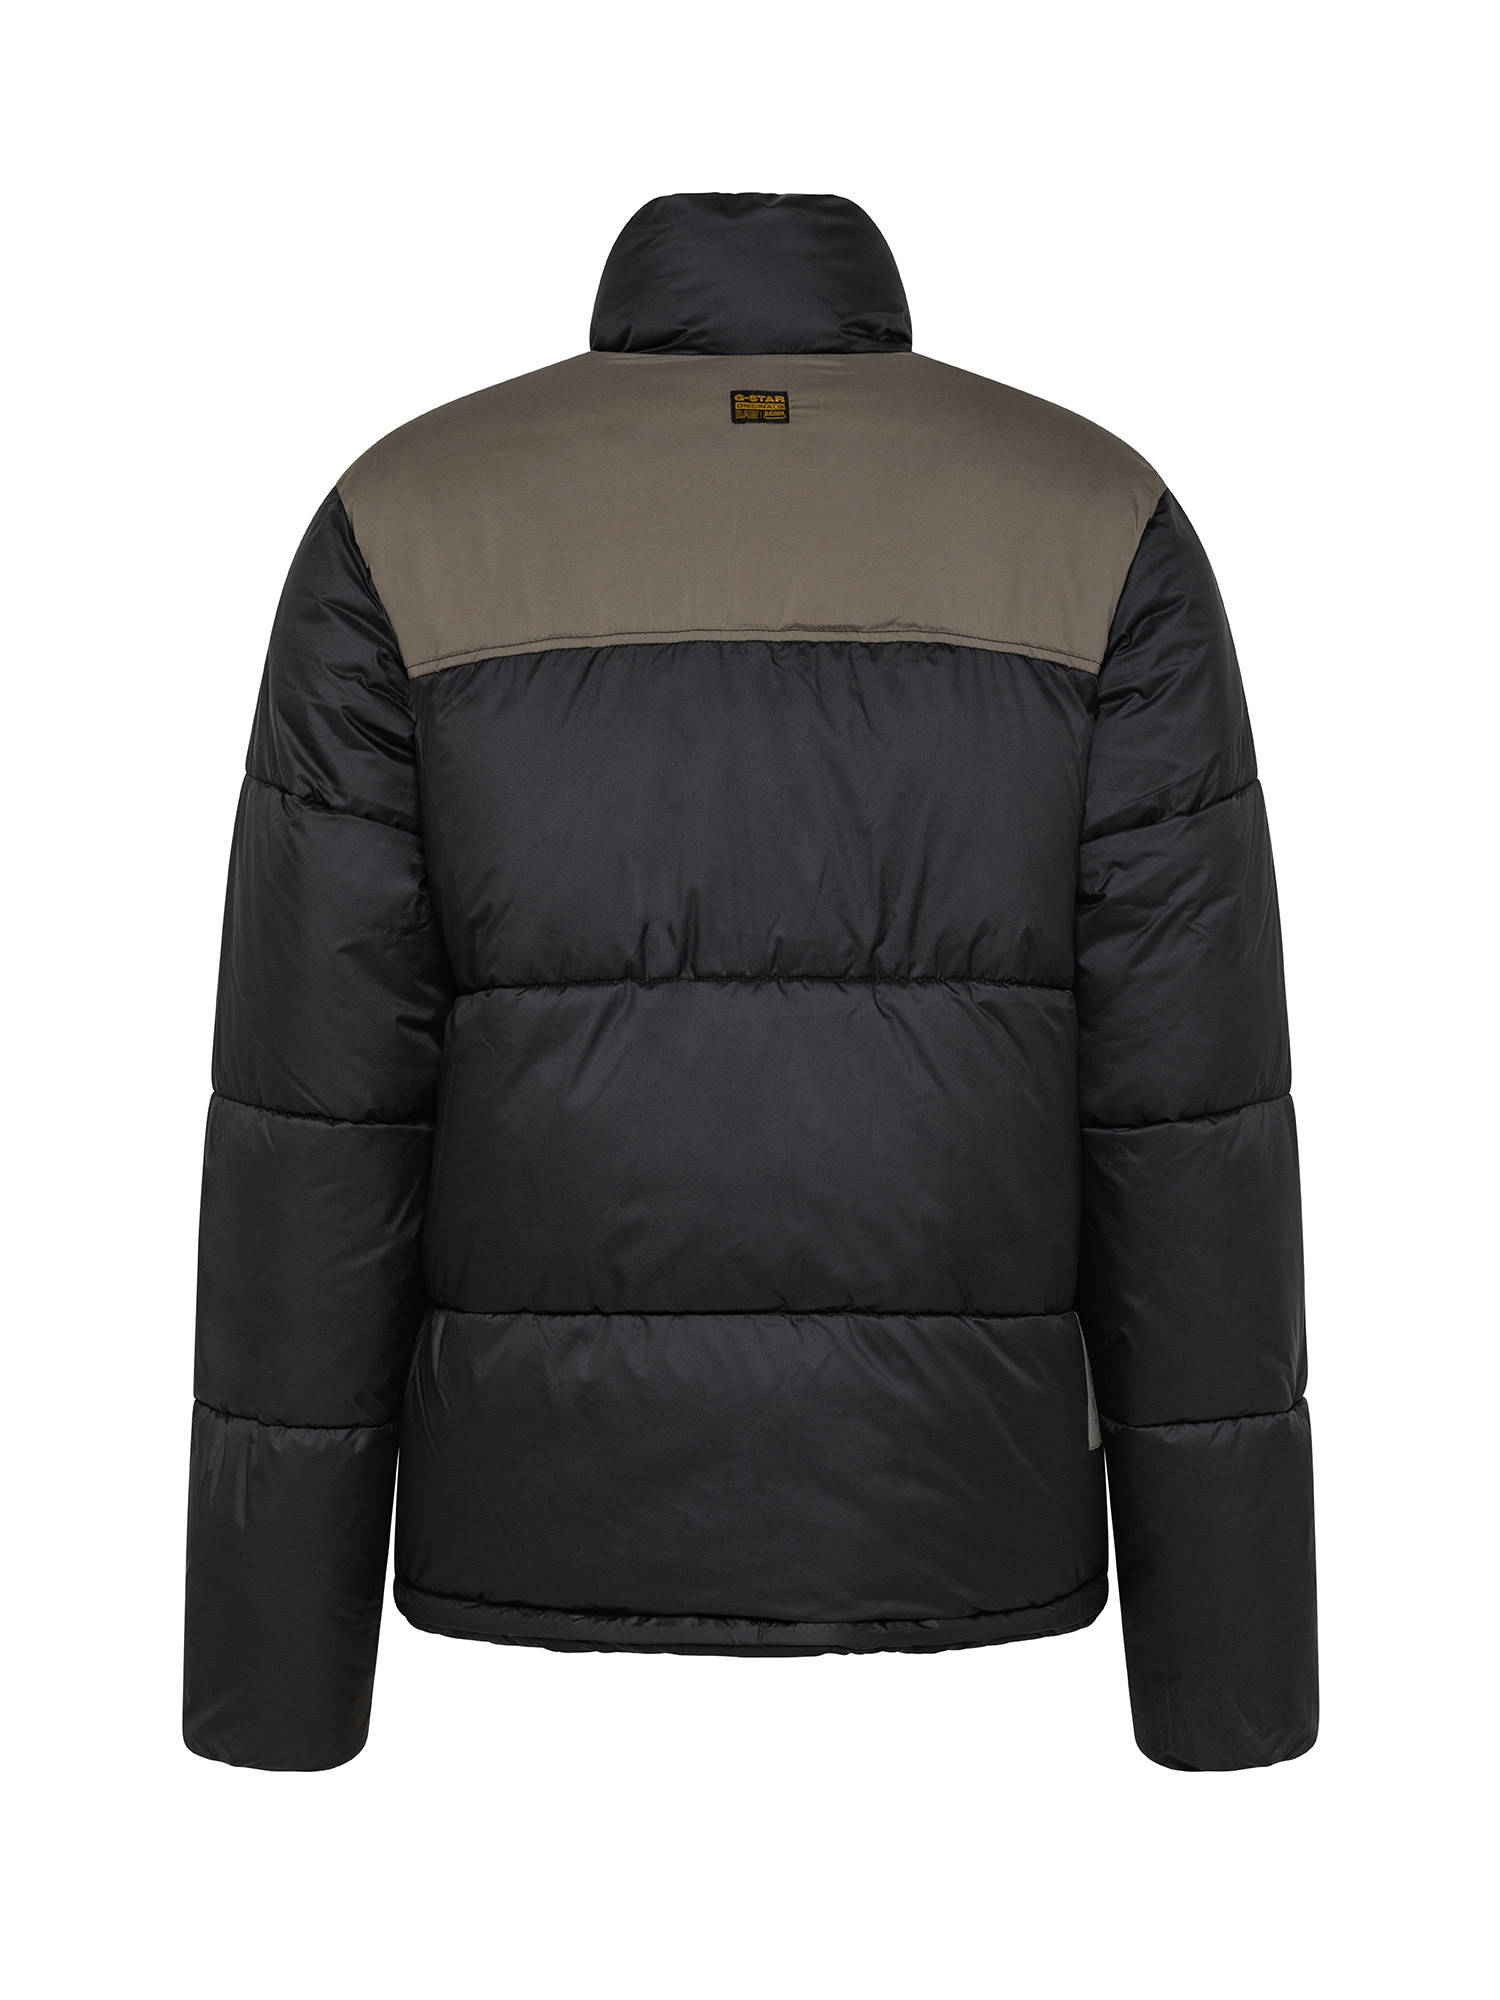 G-Star - Down jacket with pockets, Black, large image number 1